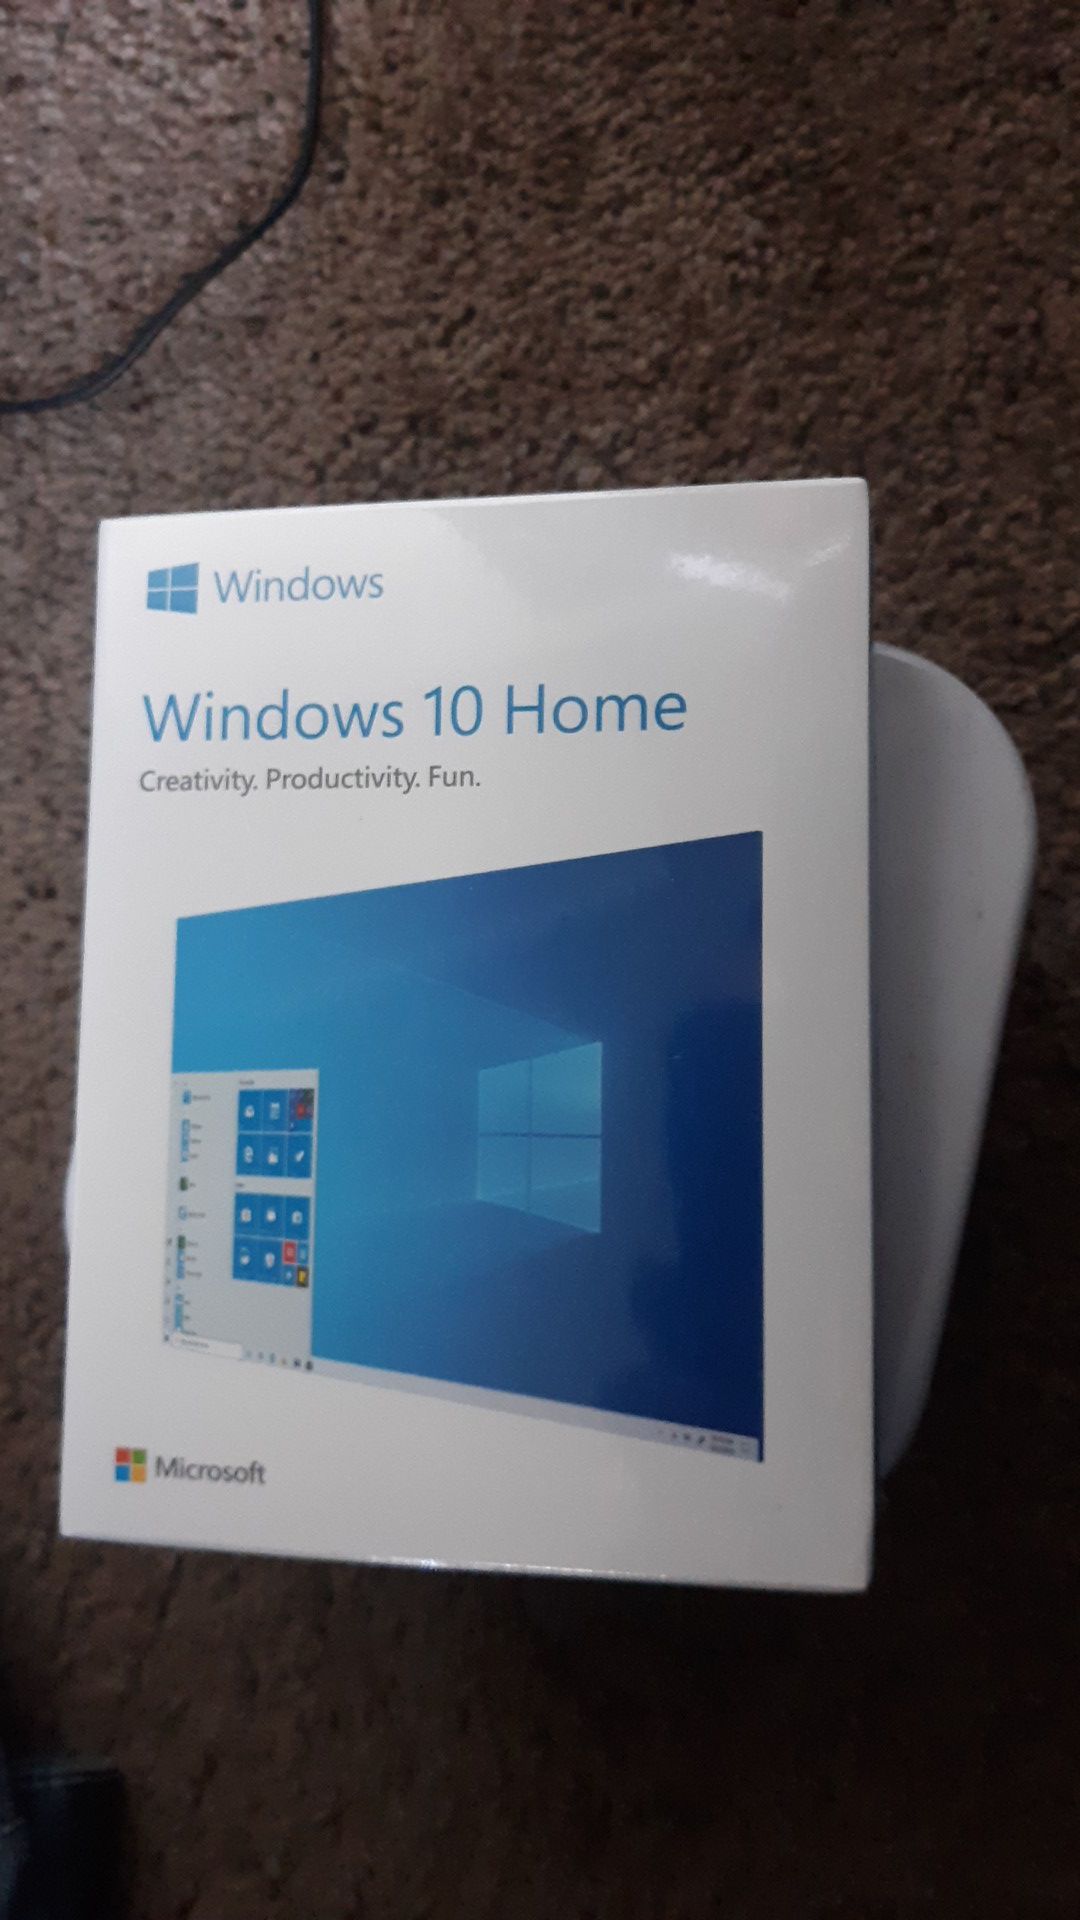 Microsoft Windows 10 home program.